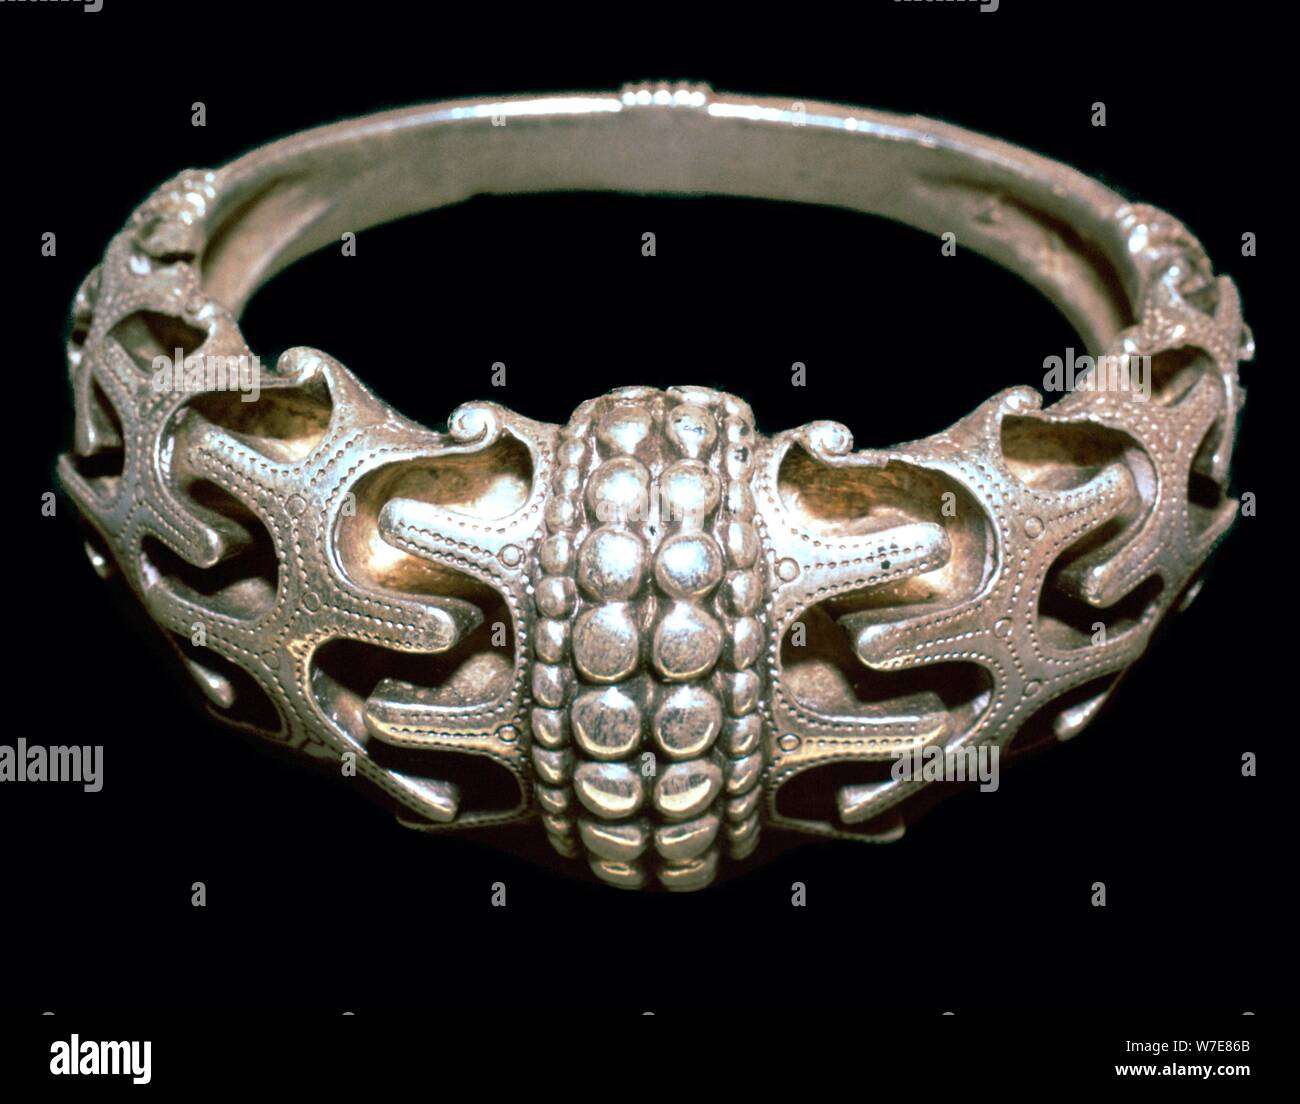 Argent massif bracelet Viking, 10ème siècle. Artiste : Inconnu Photo Stock  - Alamy